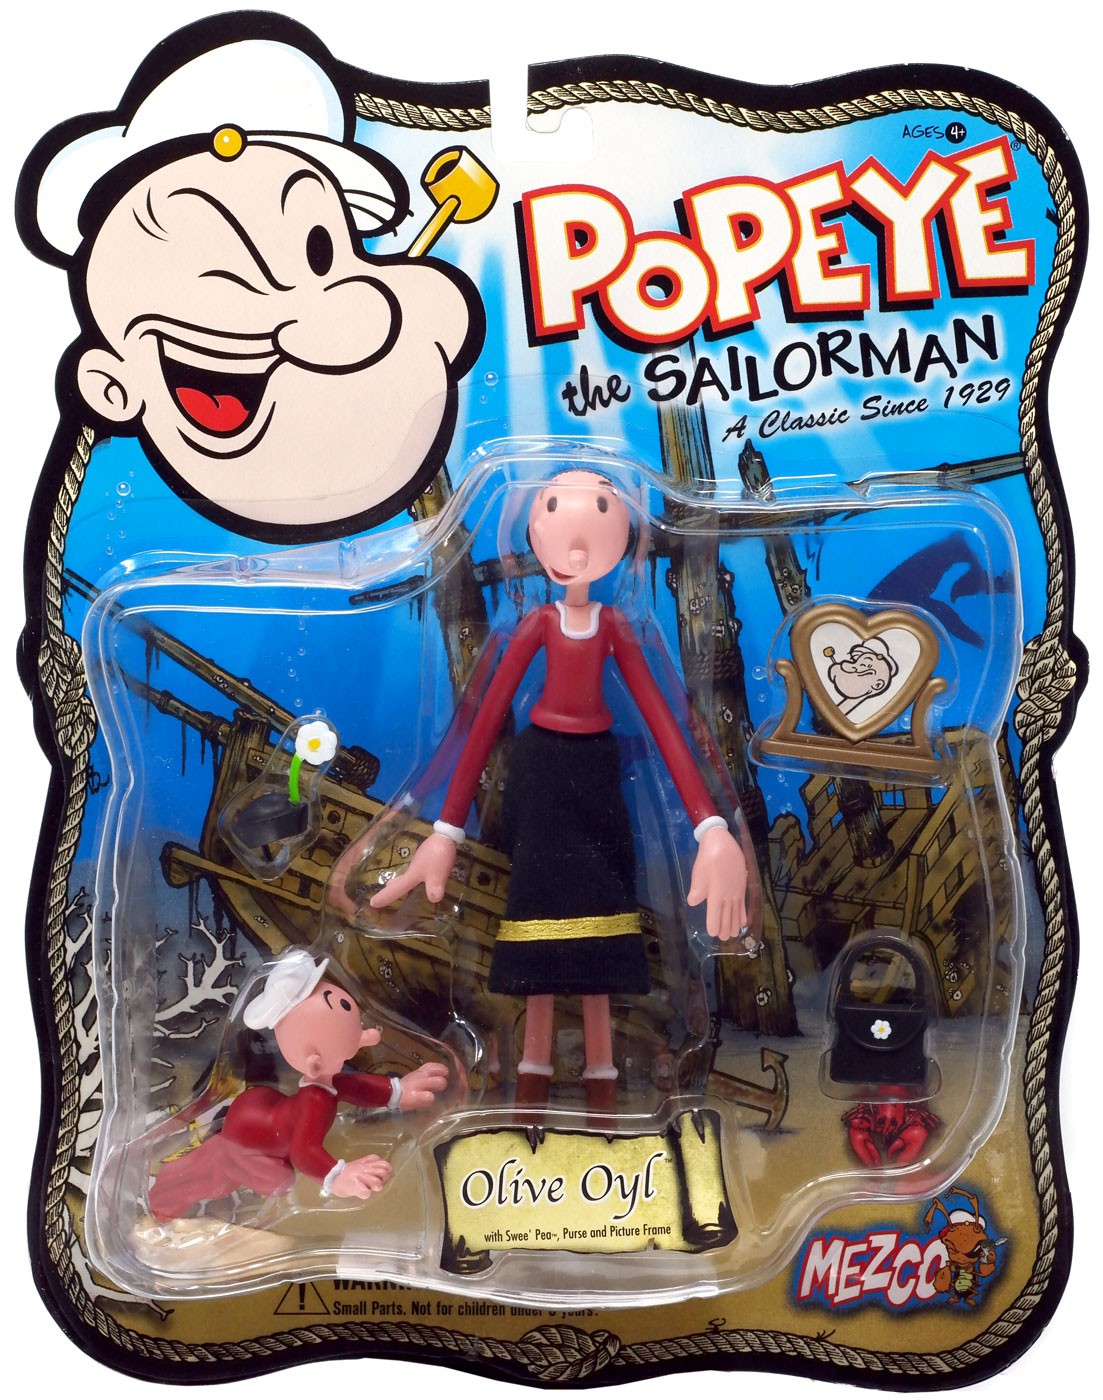 Popeye the Sailor Man Olive Oyl Action Figure 696198440034 eBay